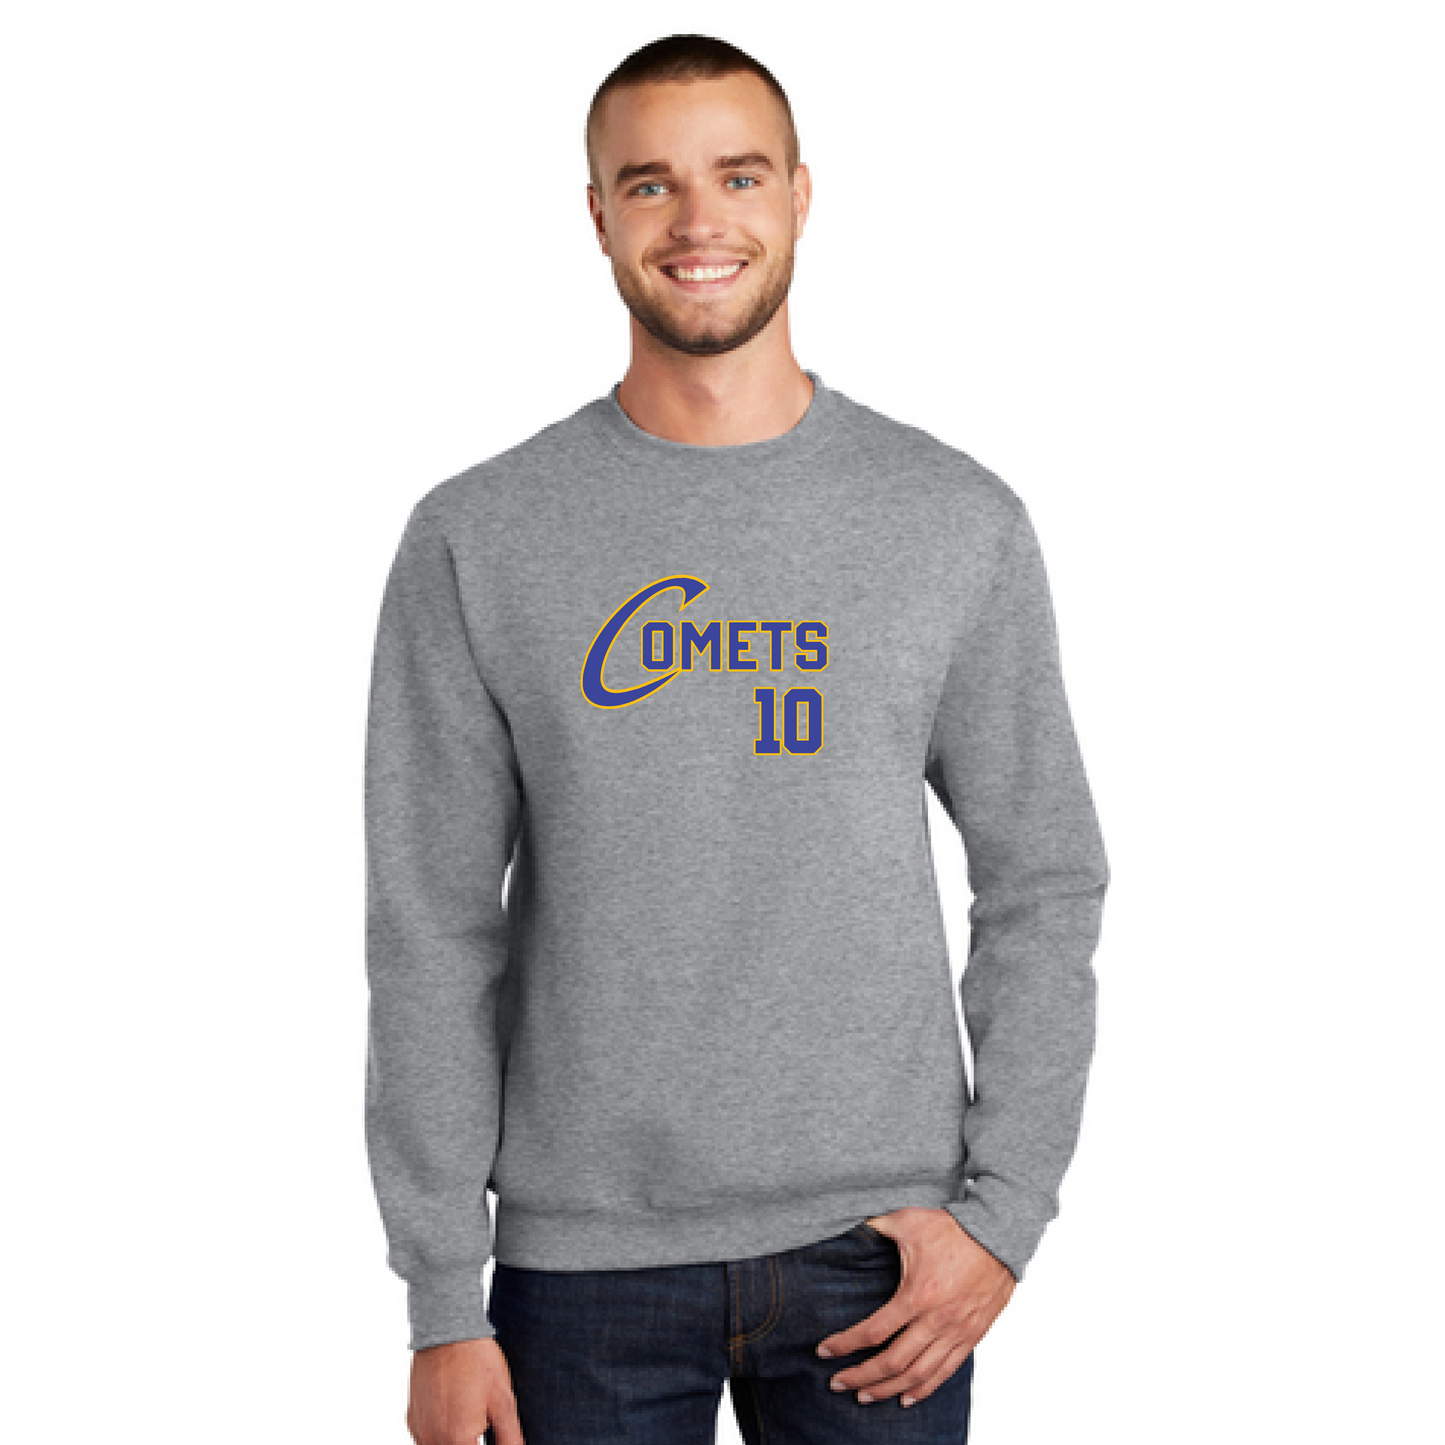 Comets Crew Sweatshirt - Customizable